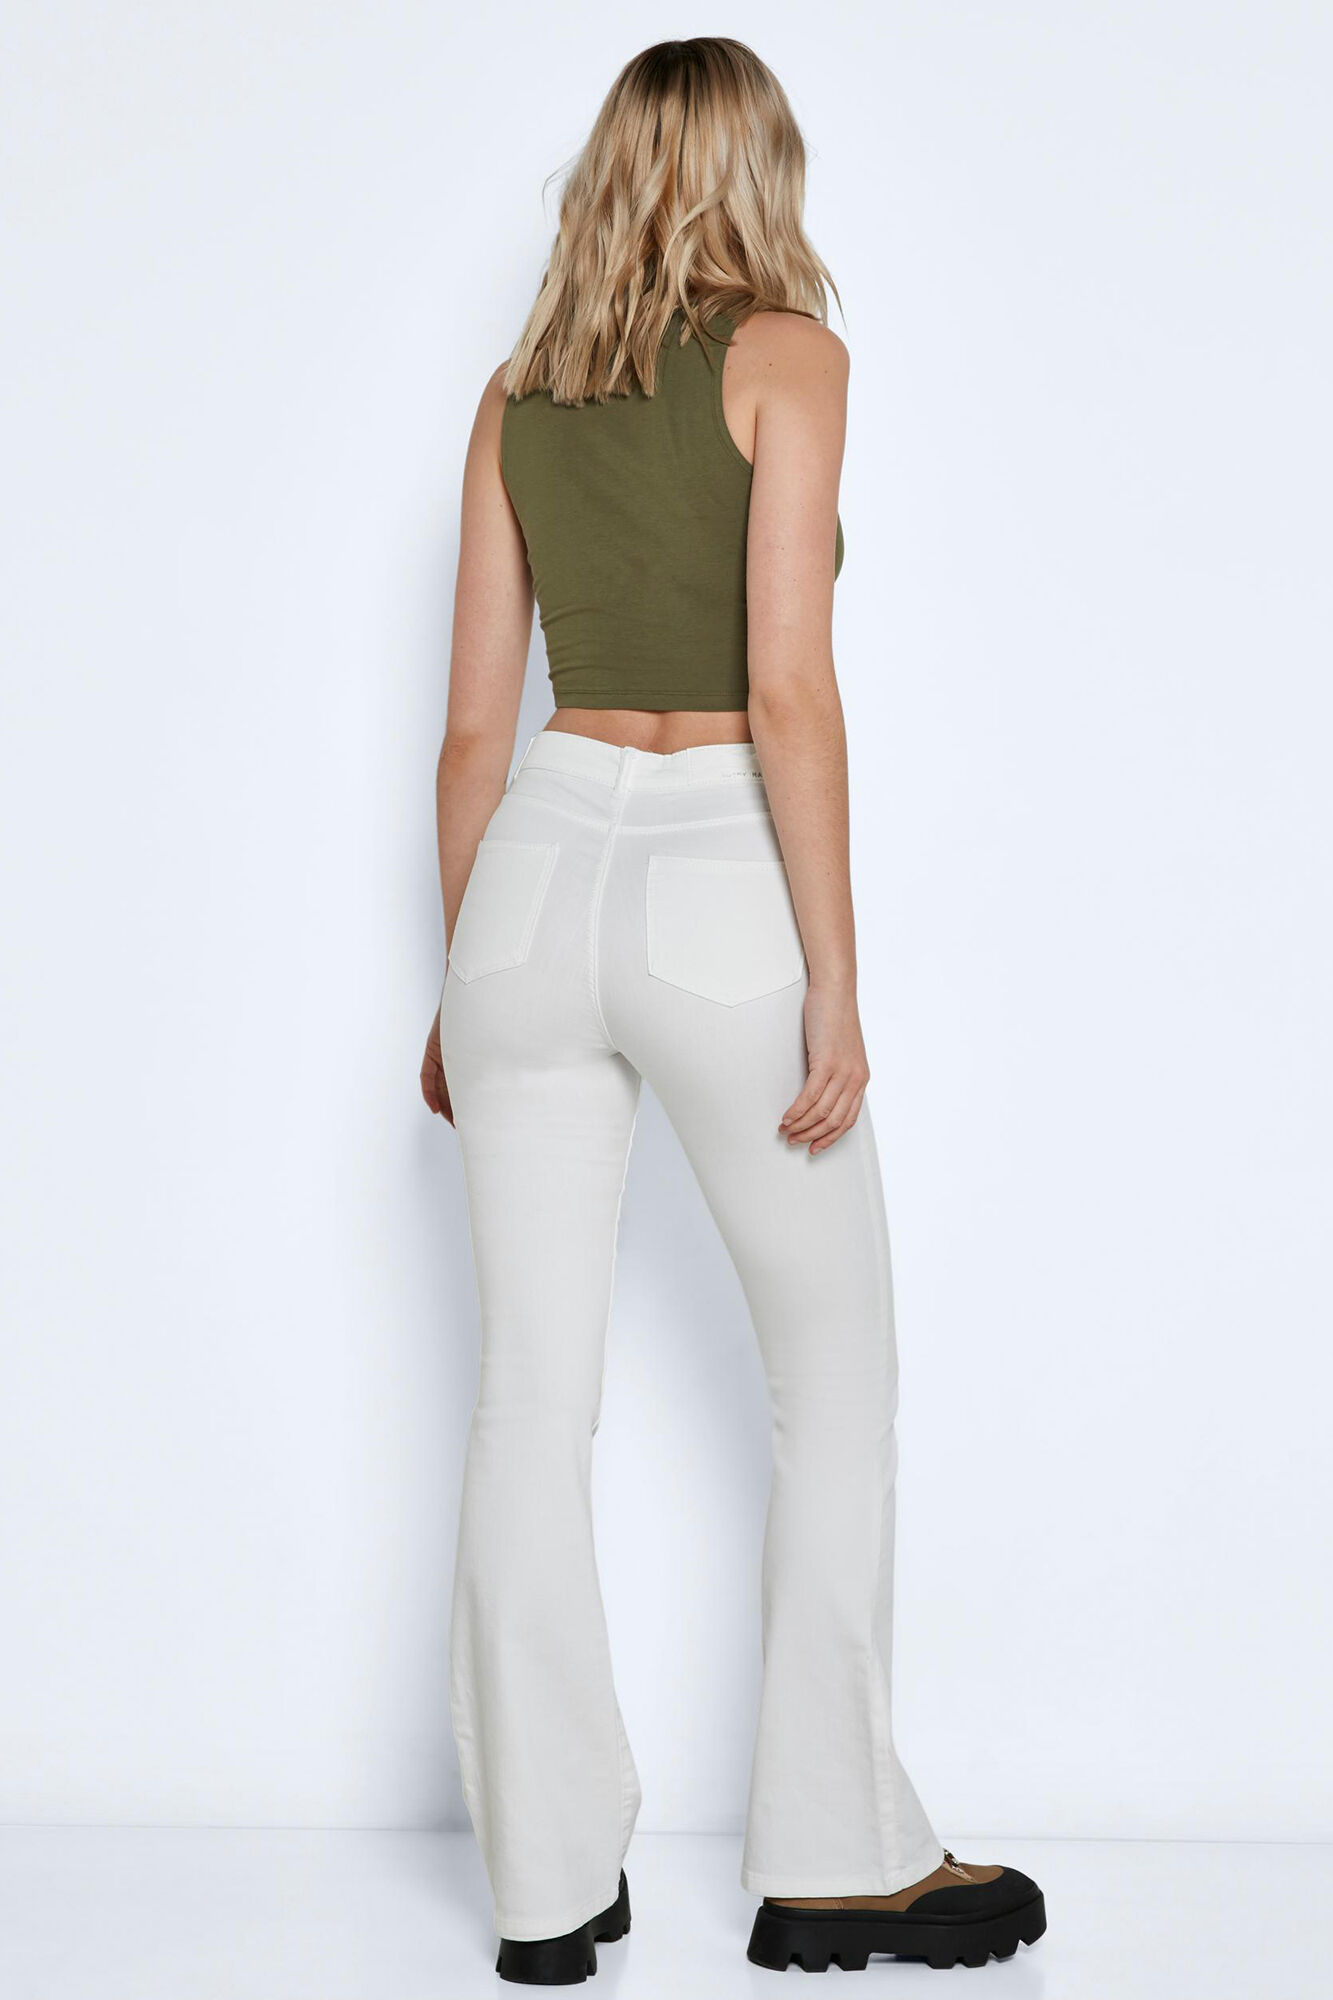 VSSSJ Women's Fashion Long Pants Slim Fit Solid Color High Waist Hip  Lifting Full Length Pants Comfortable Stretchy Tight Trousers Light Blue S  - Walmart.com